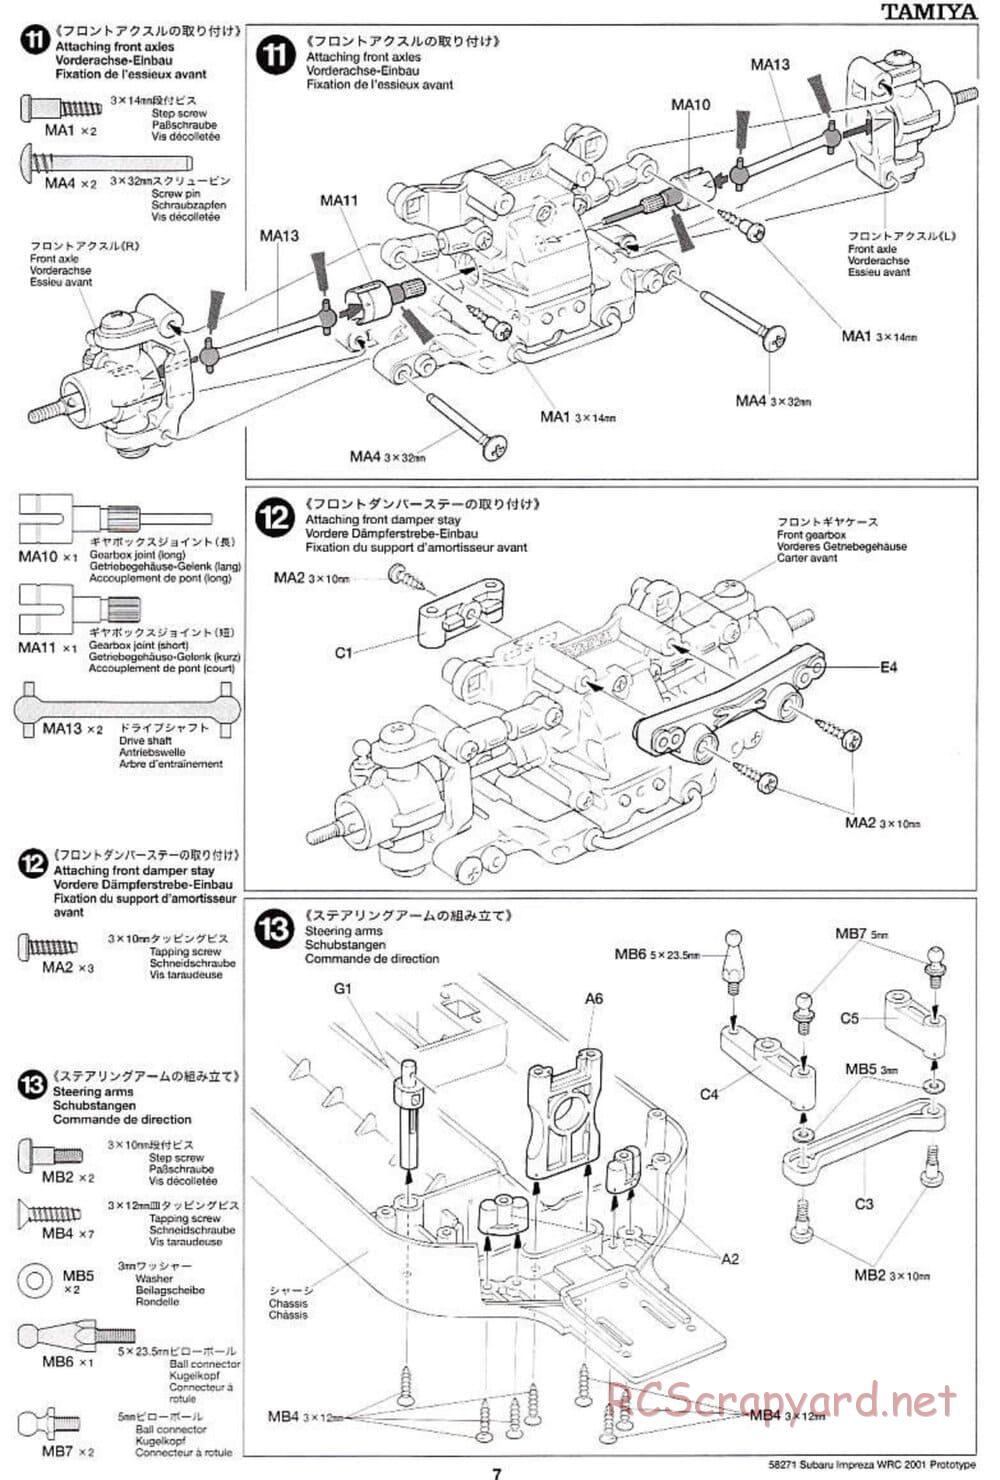 Tamiya - Subaru Impreza WRC 2001 Prototype - TB-01 Chassis - Manual - Page 7